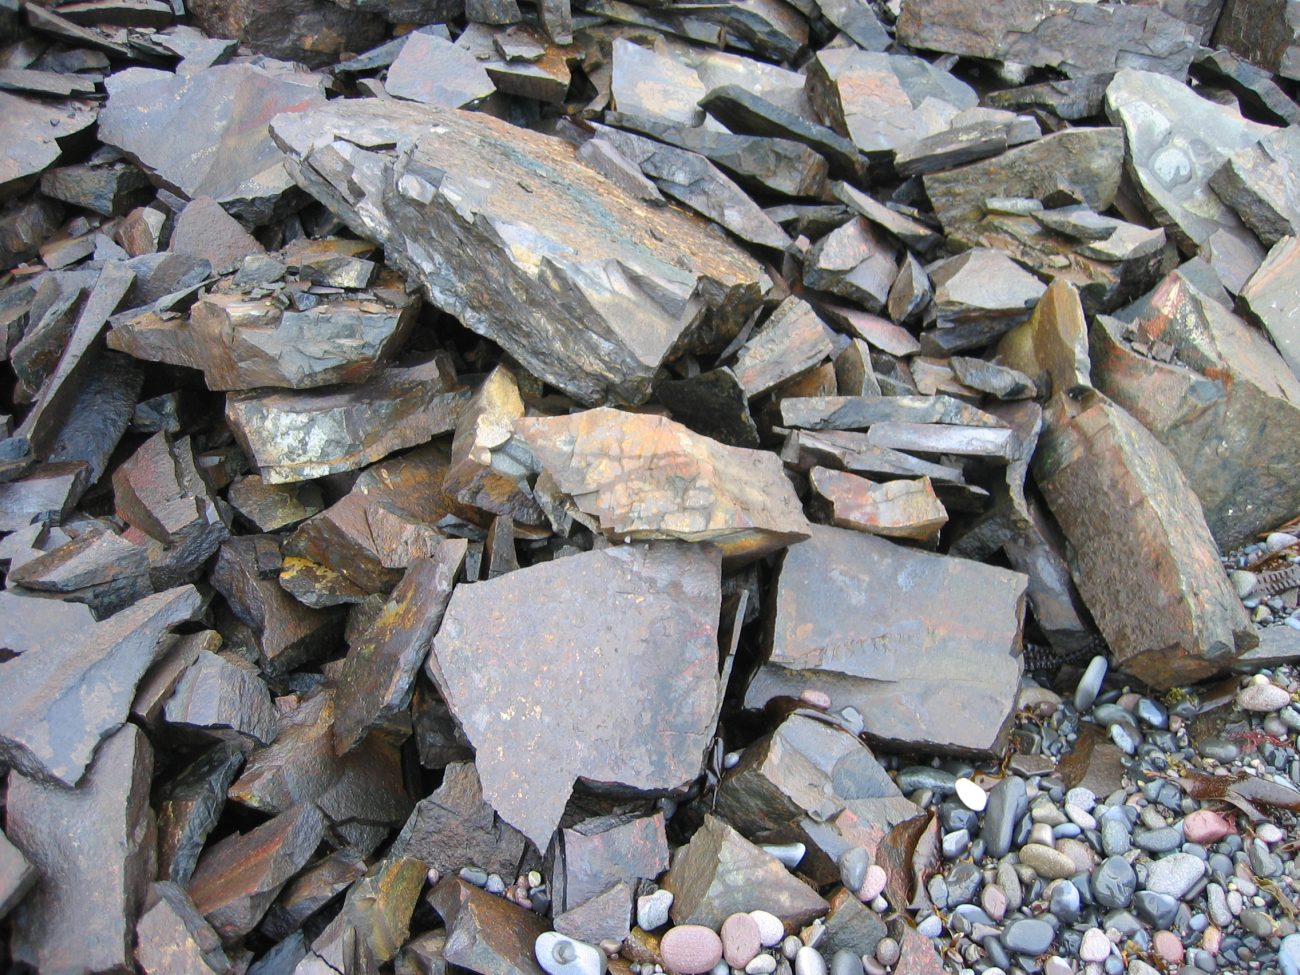 A scree slope of angular blocks of rock